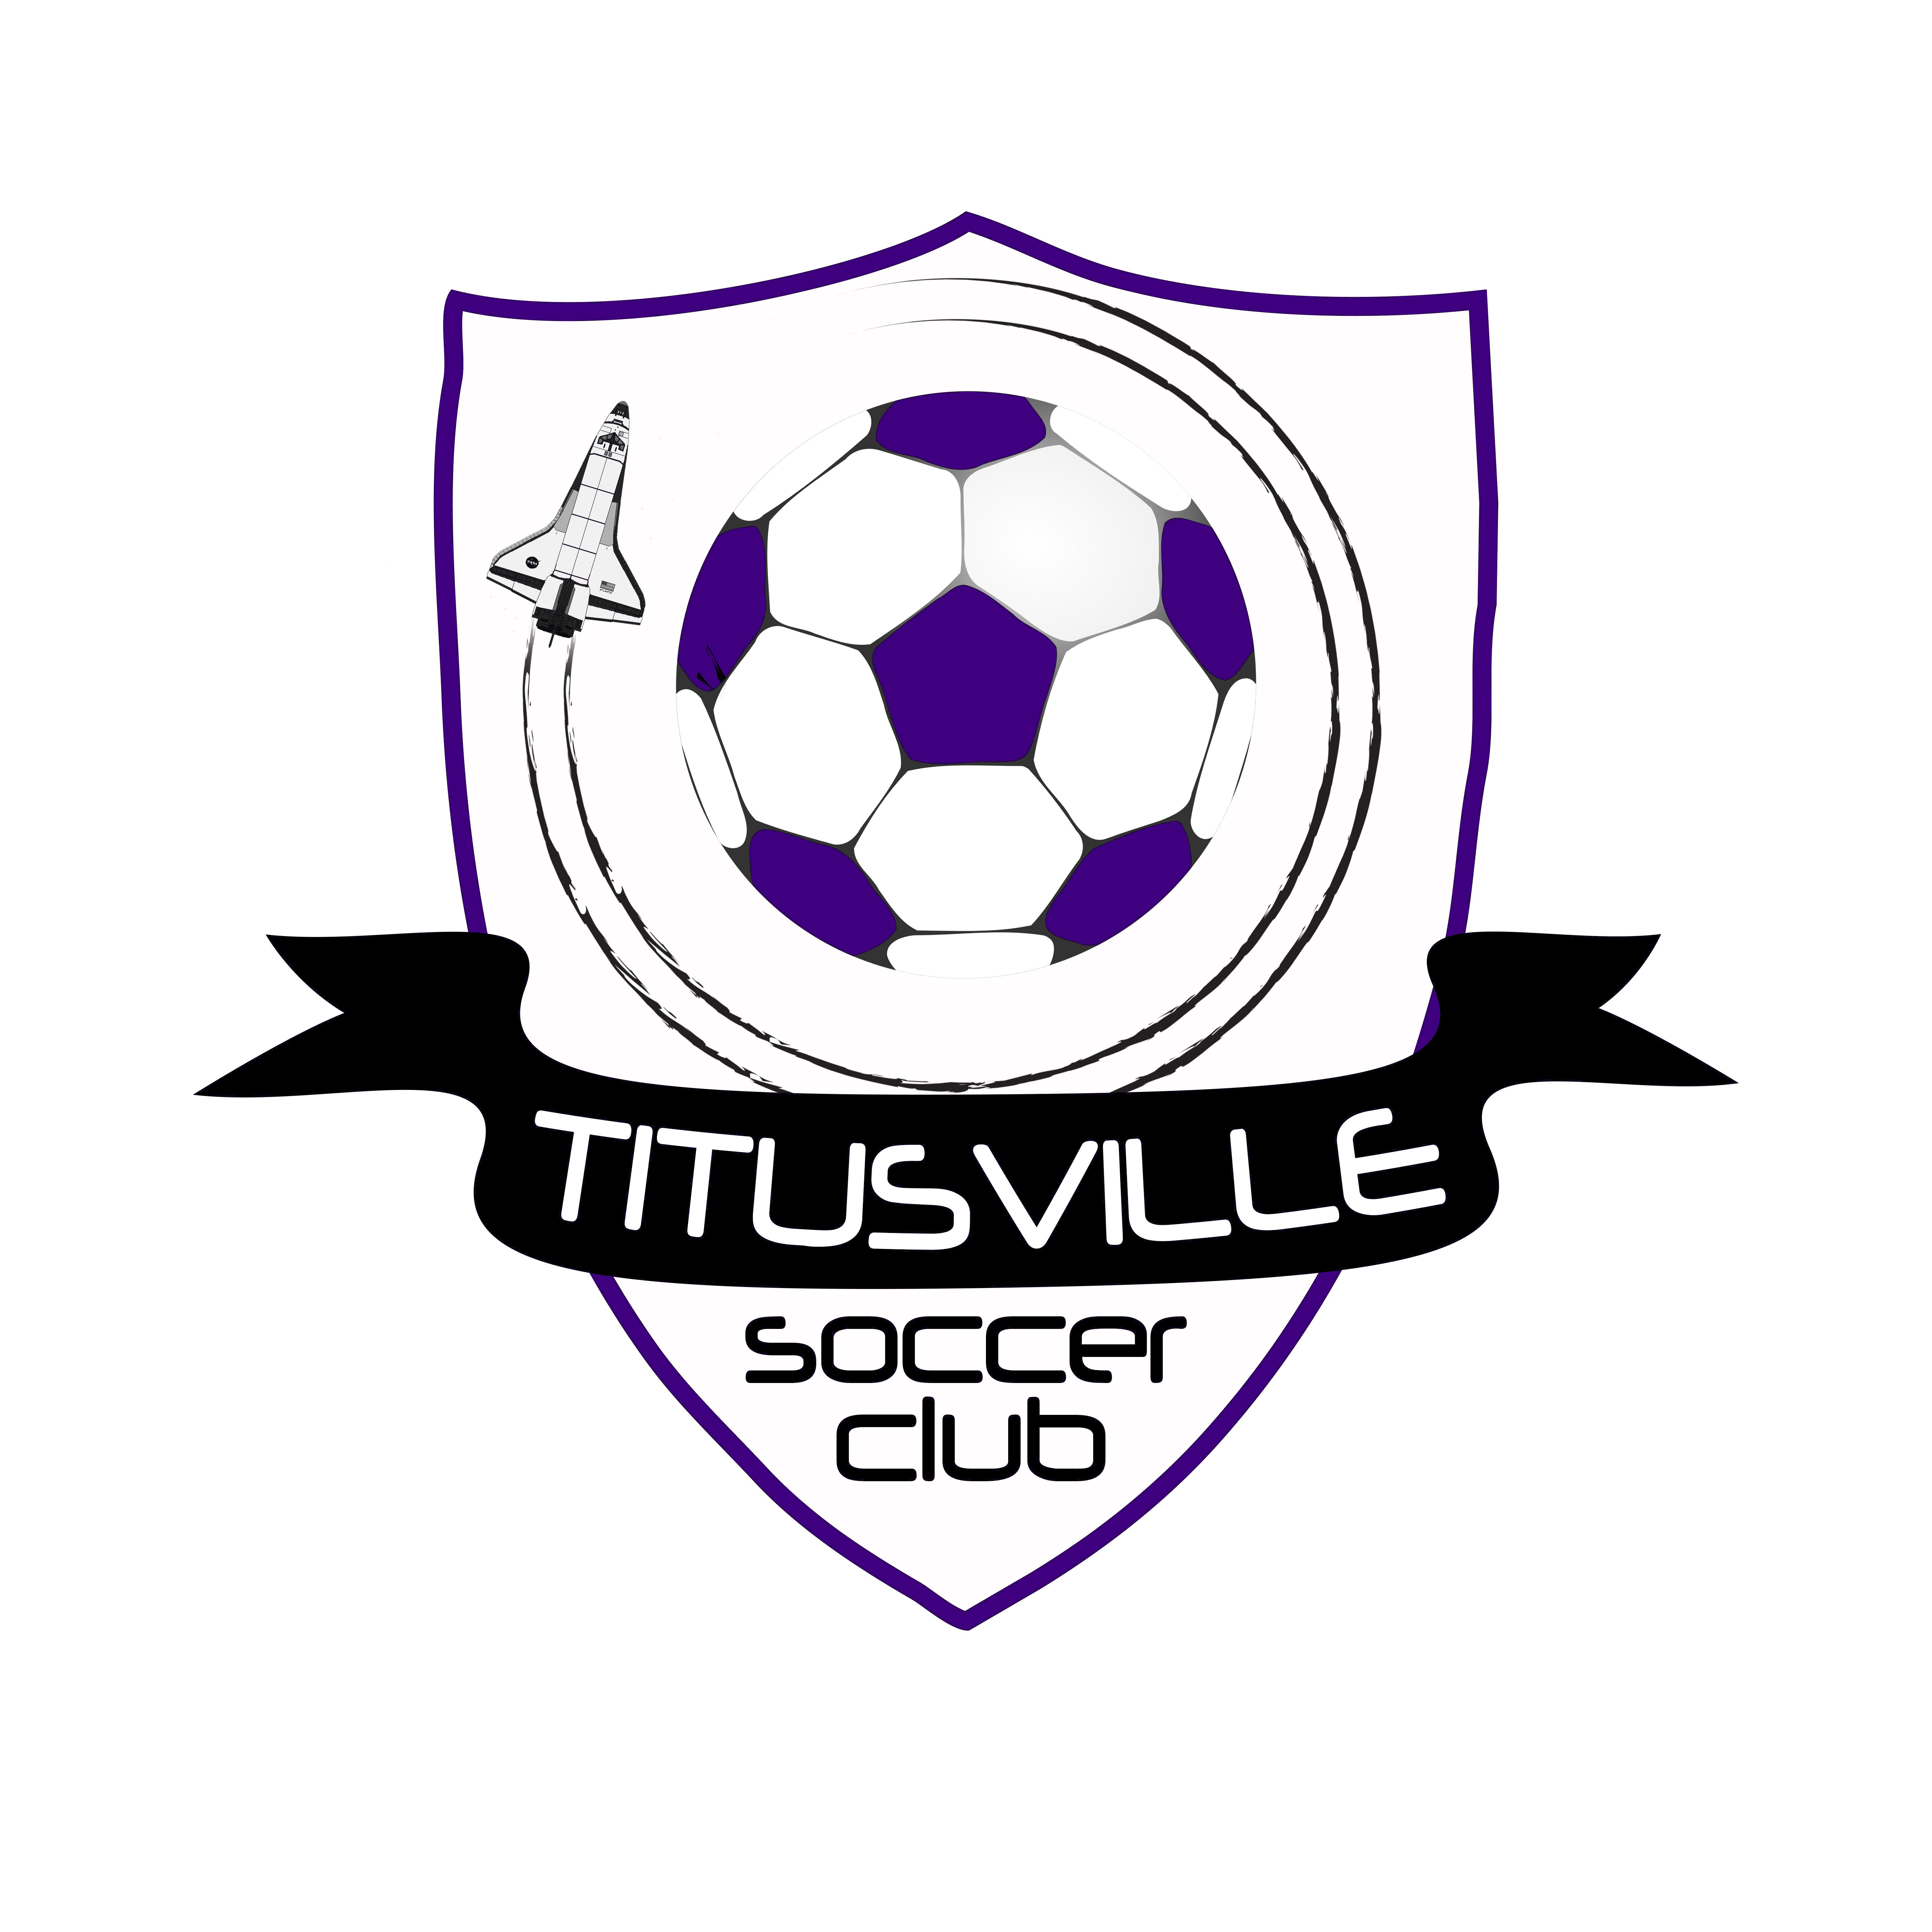 BSTSC Titusville Soccer Club team badge